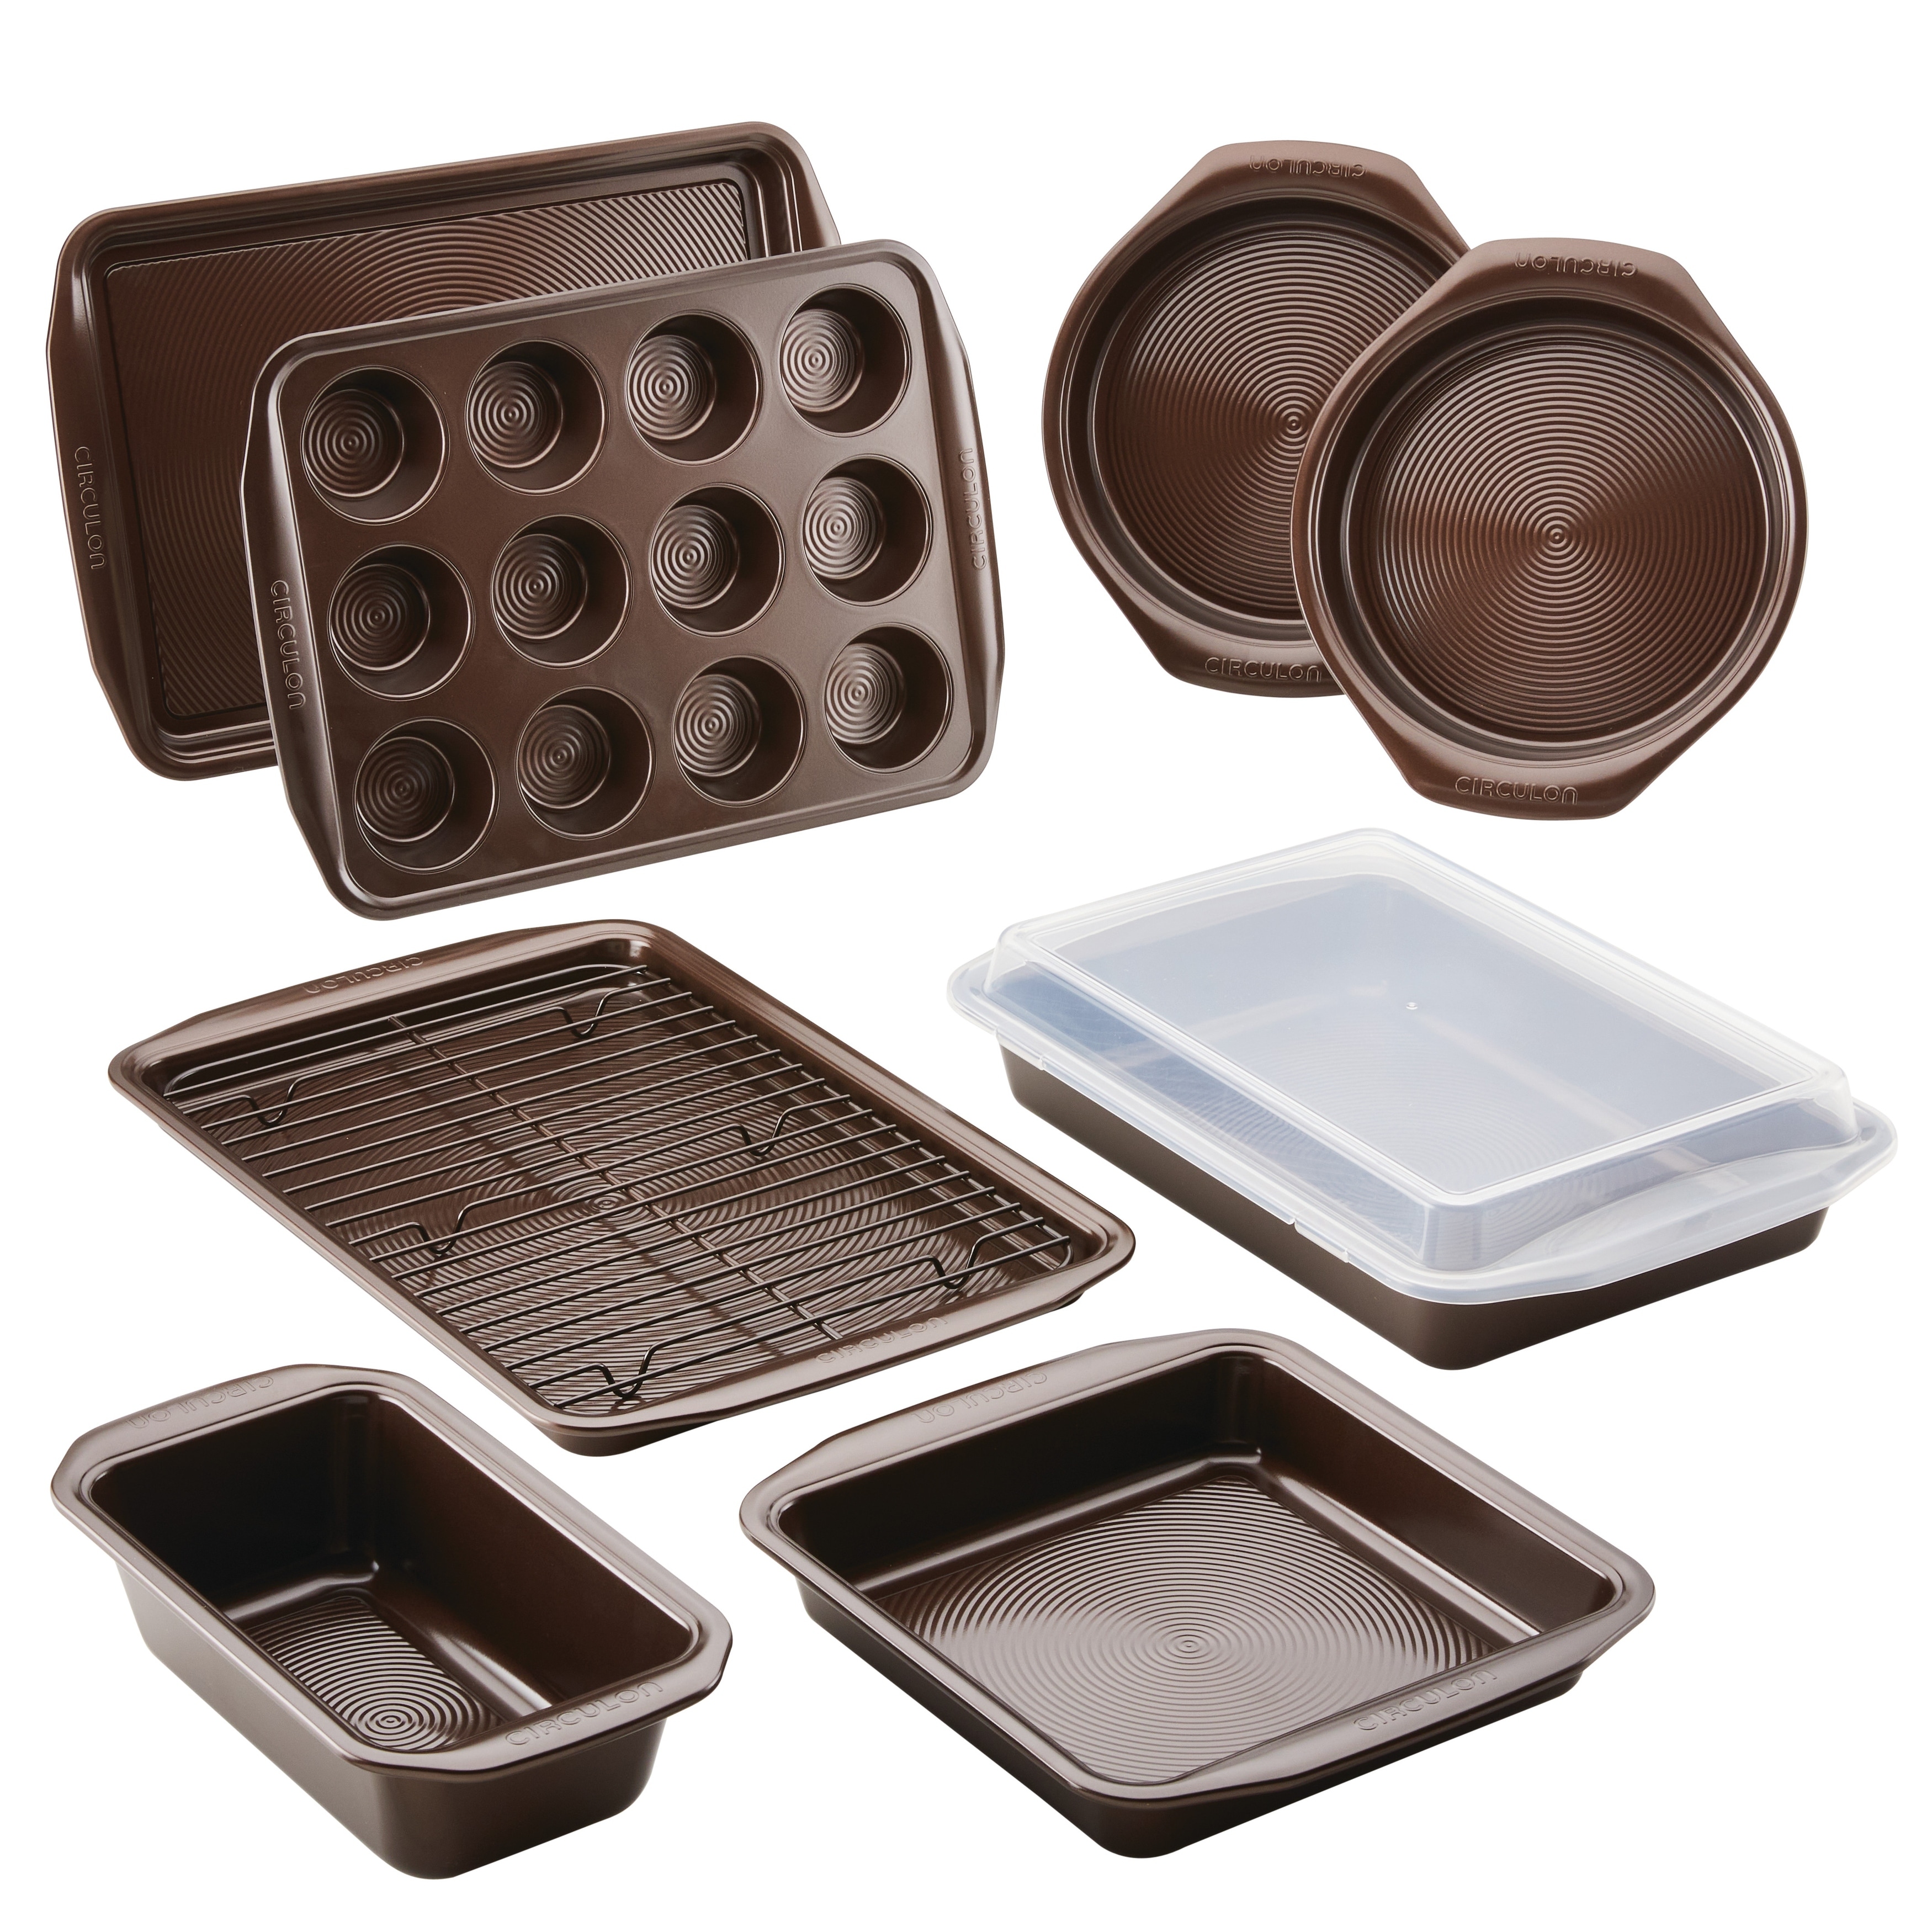 https://ak1.ostkcdn.com/images/products/is/images/direct/1116b71e1a366c8af053e9897f1accc22d21924d/Circulon-Bakeware-Nonstick-Bakeware-Set%2C-10-Piece%2C-Chocolate-Brown.jpg